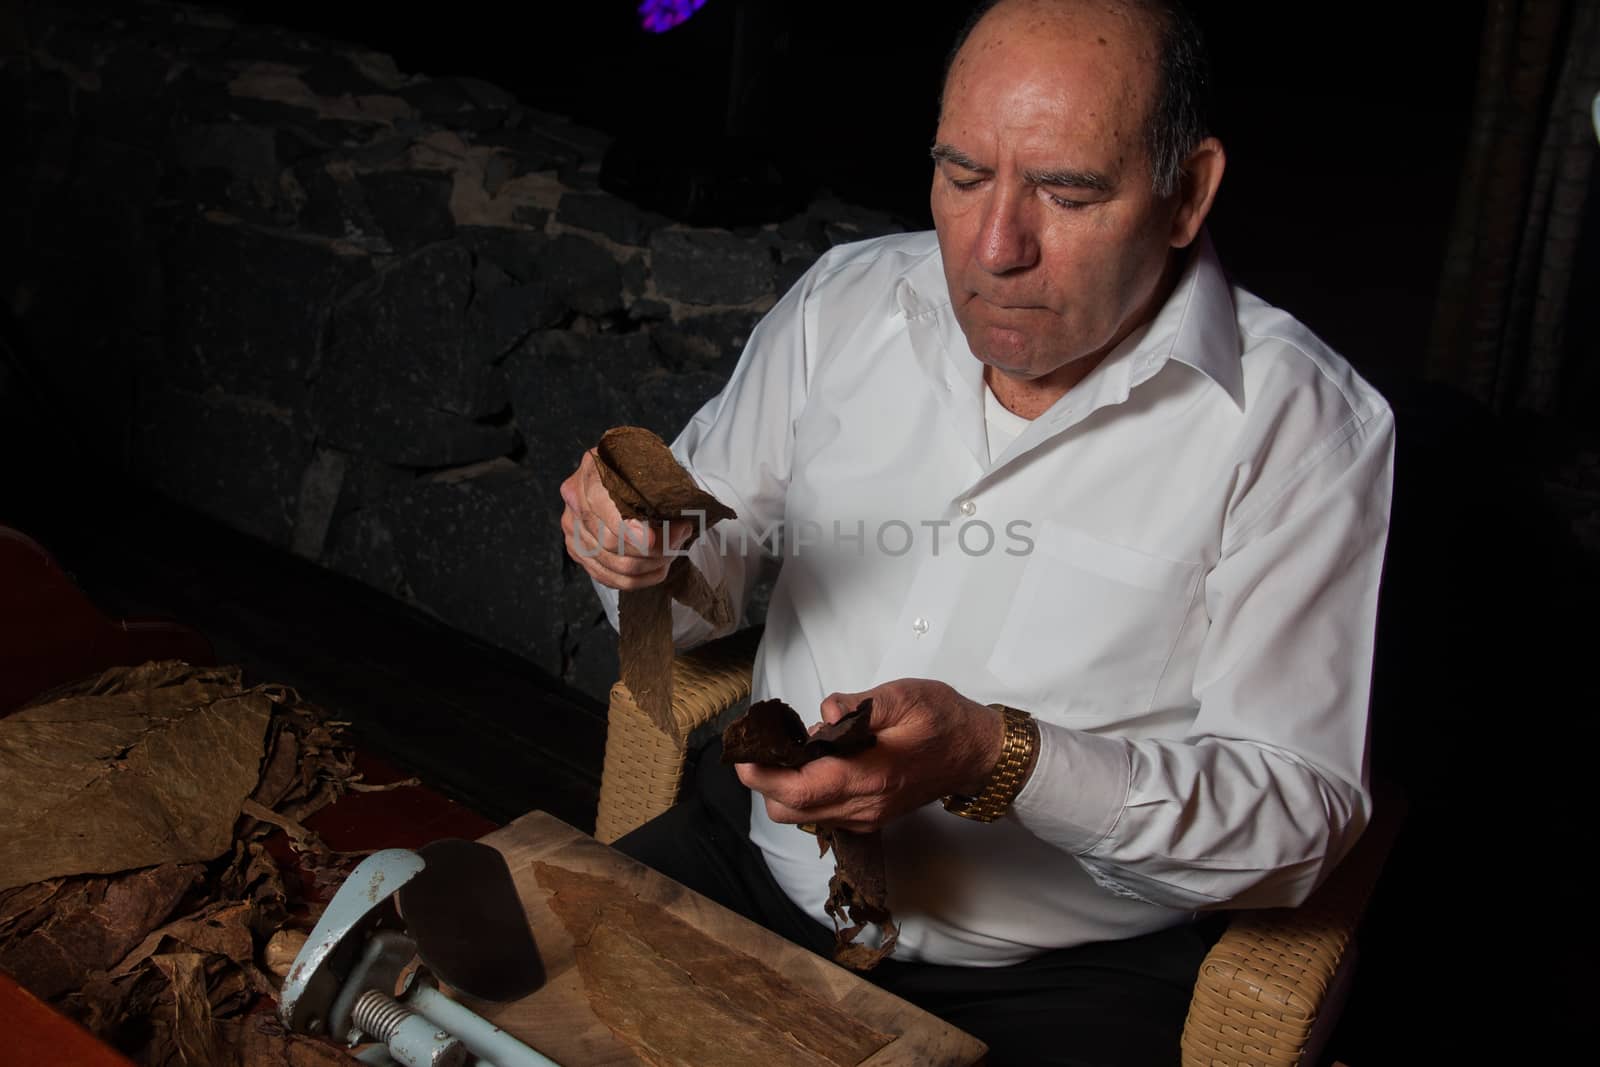 TENERIFE, RITZ ABAMA HOTEL, february 2016-Old man Torcedor rolling hand made cigars parejos







Torcedor rolling hand made cigars parejos